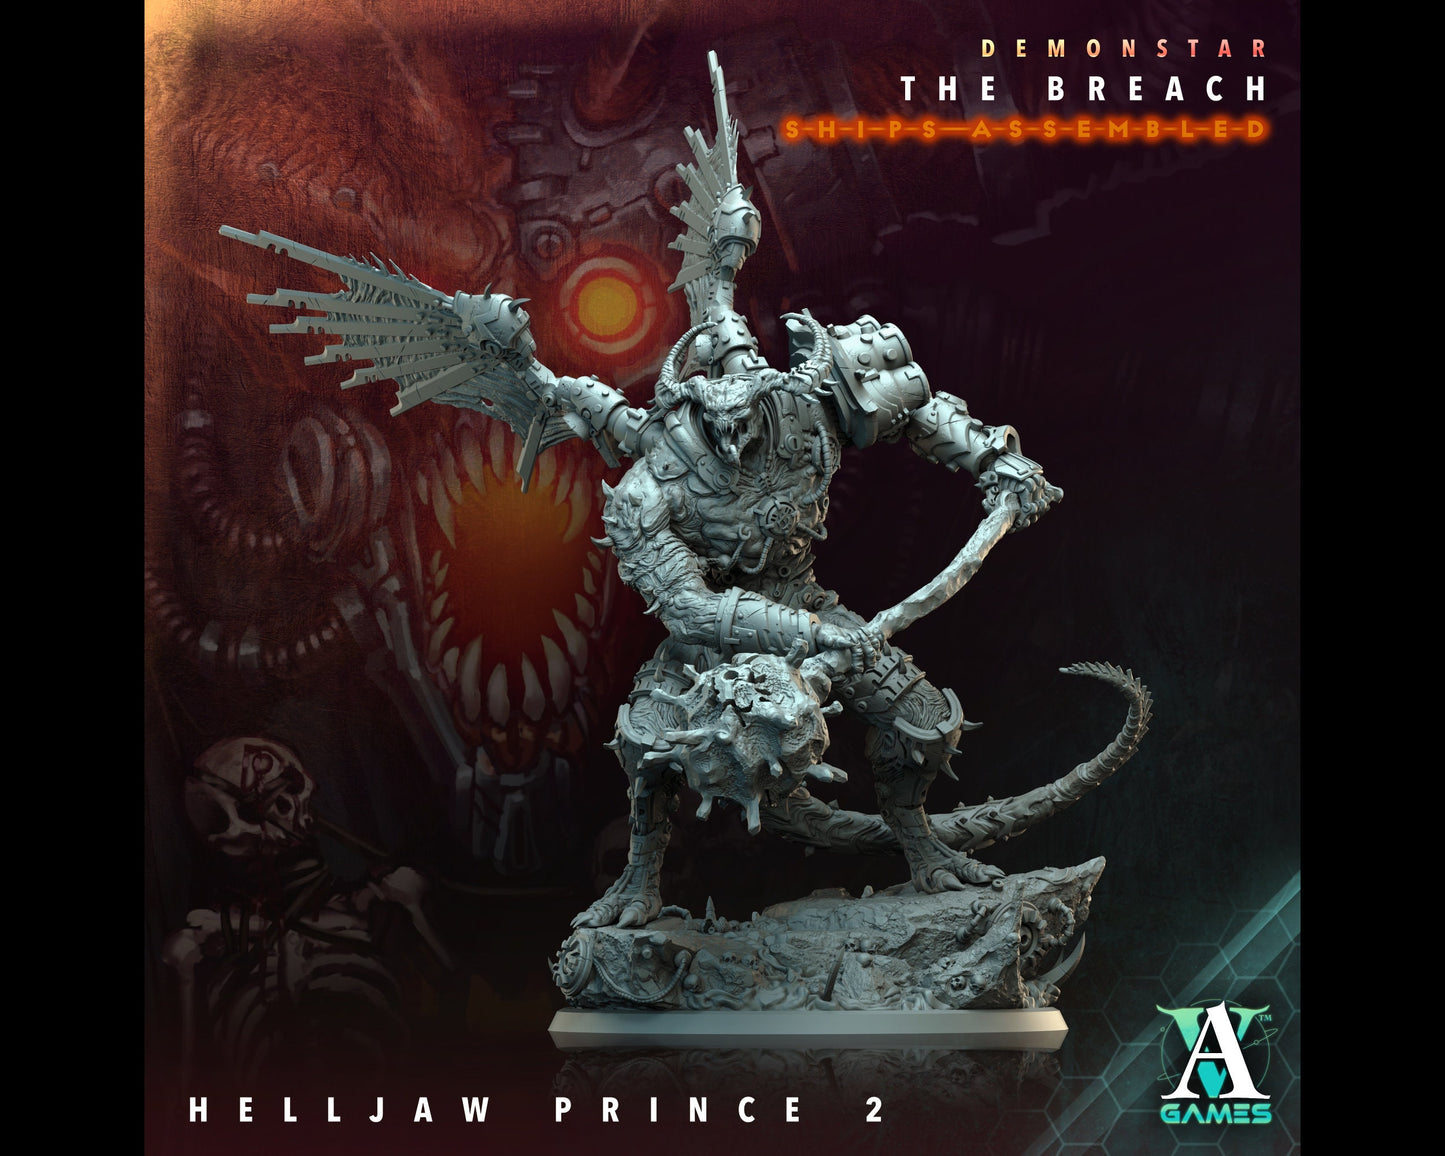 Helljaw Prince 2 - Demonstar: The Breach - Highly Detailed Resin 8k 3D Printed Miniature